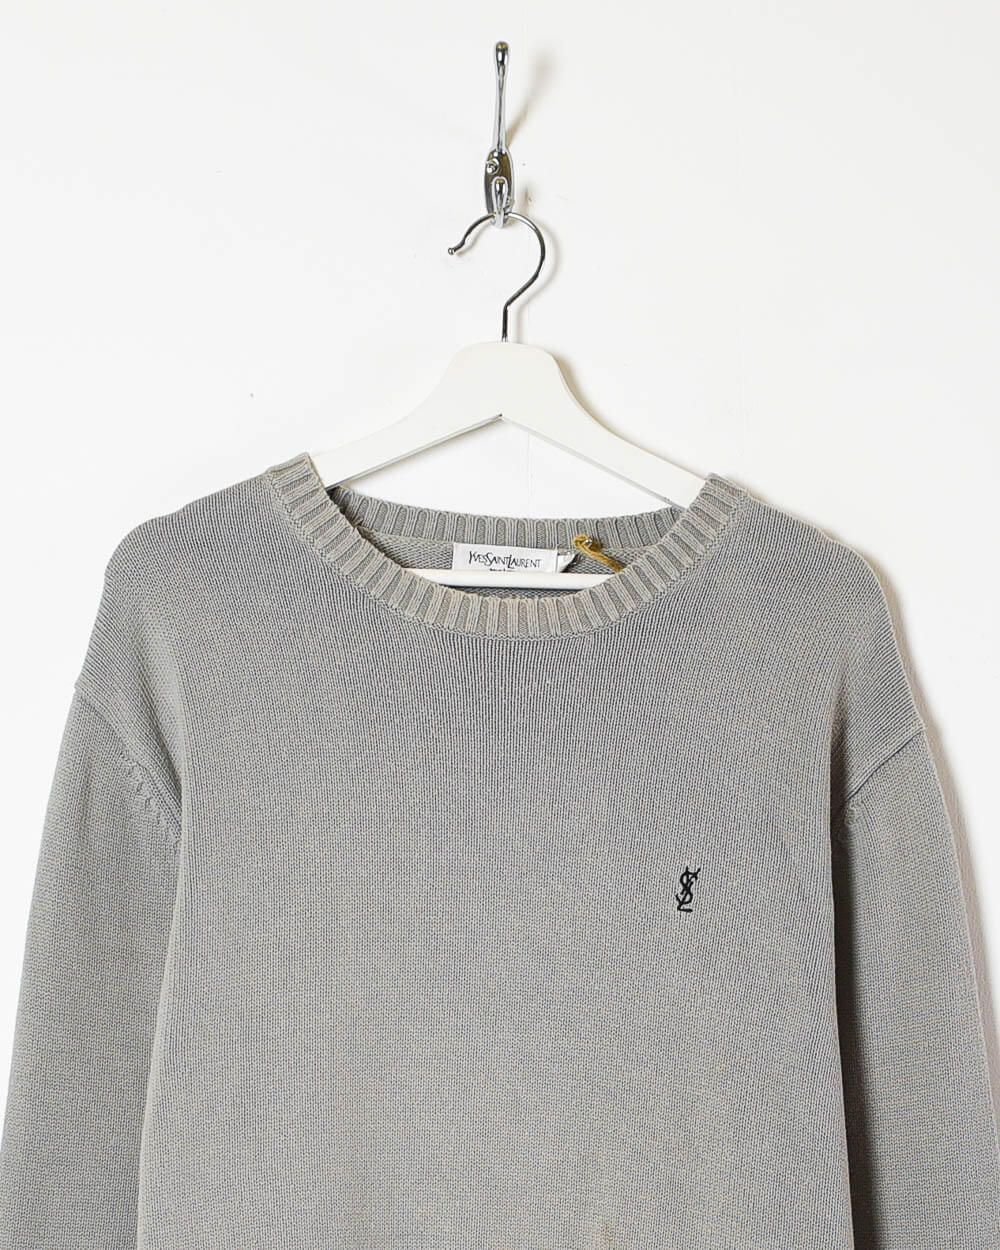 Stone Yves Saint Laurent Knitted Sweatshirt - Medium